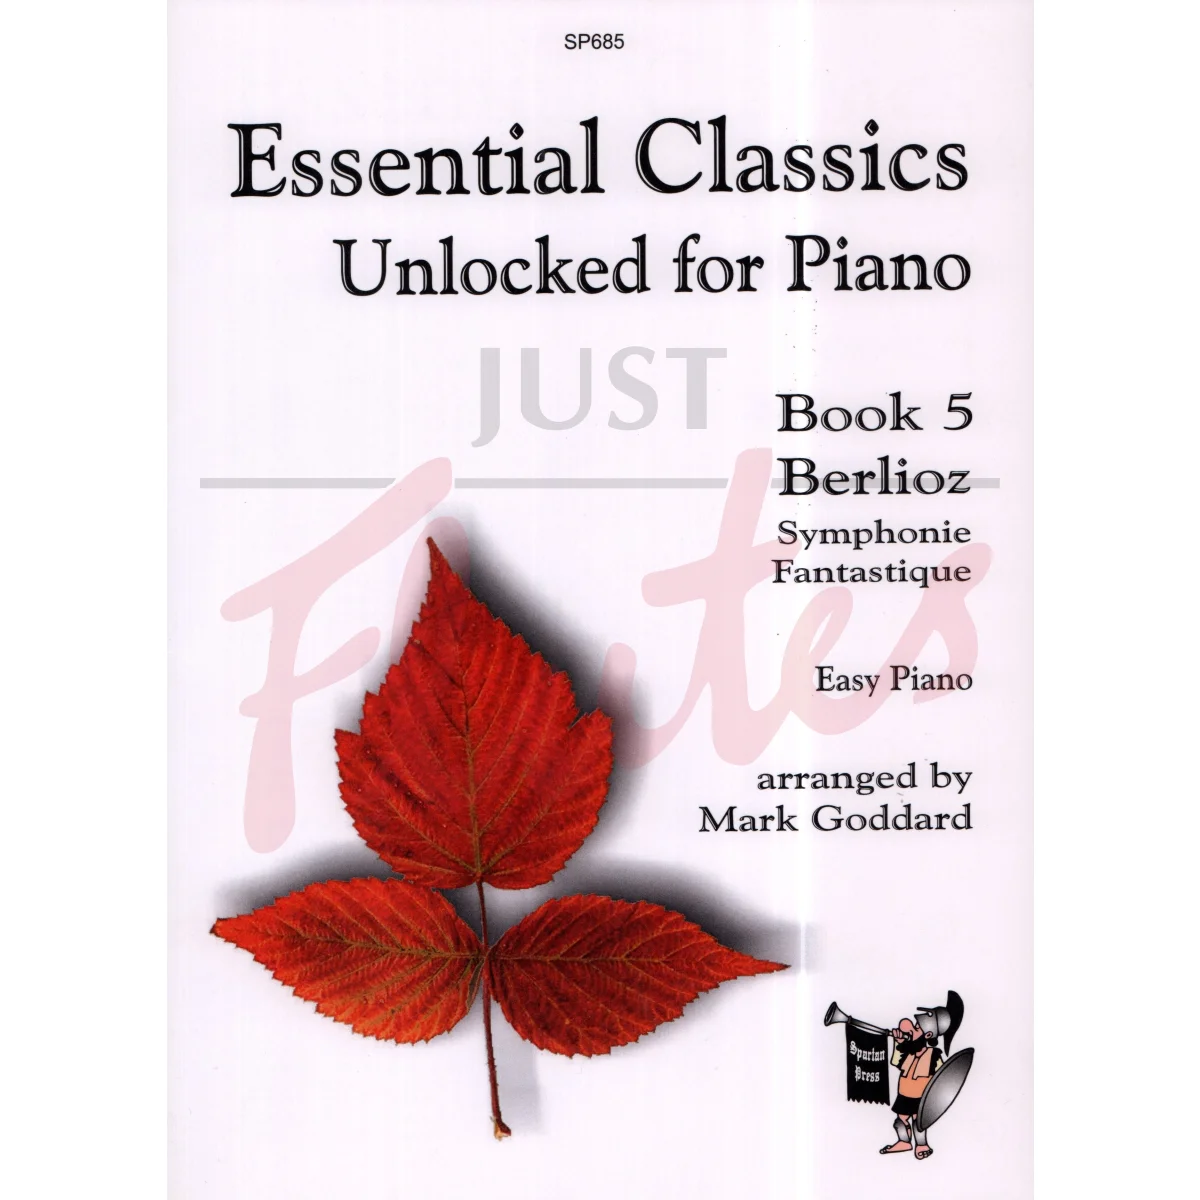 Essential Classics Unlocked for Piano: Book 5, Berlioz Symphonie Fantastique